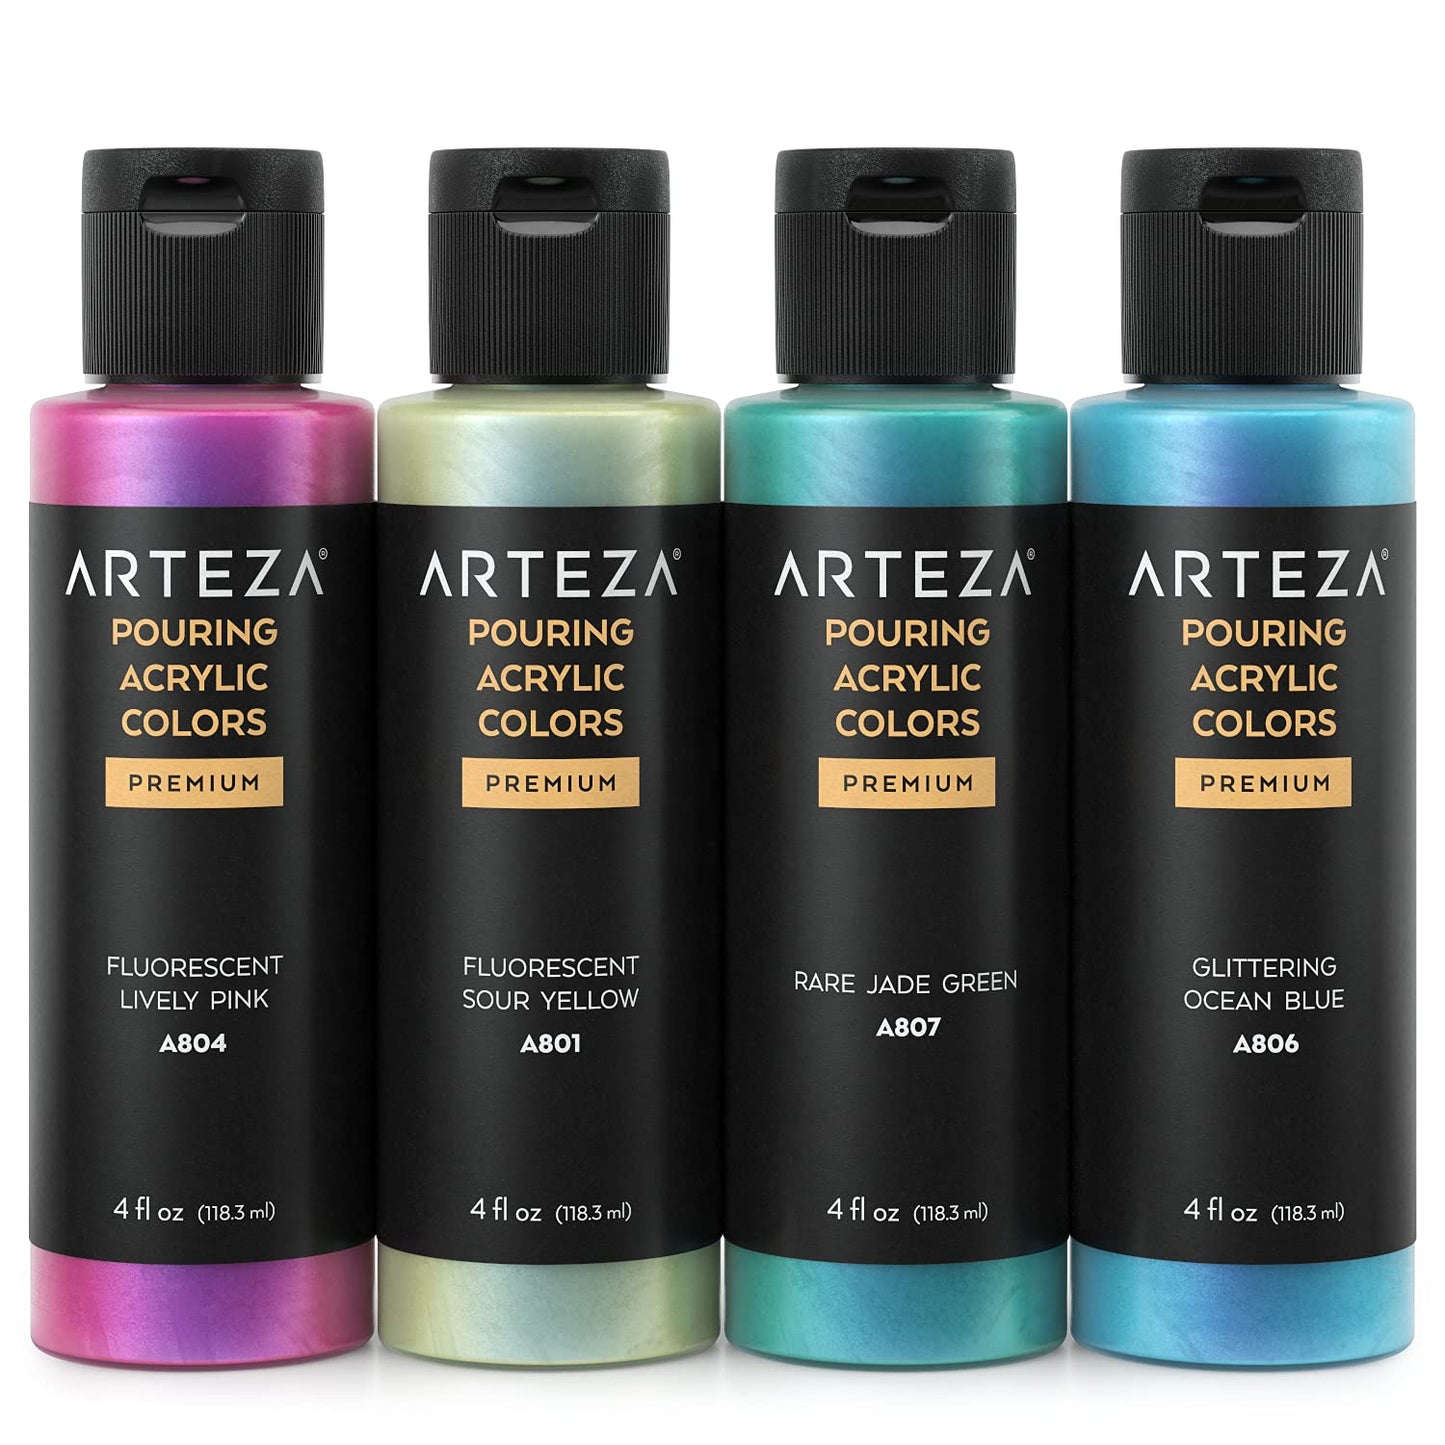 Arteza Pouring Acrylic Paint, Iridescent Candy Tones, 4oz Bottles - Set of 4